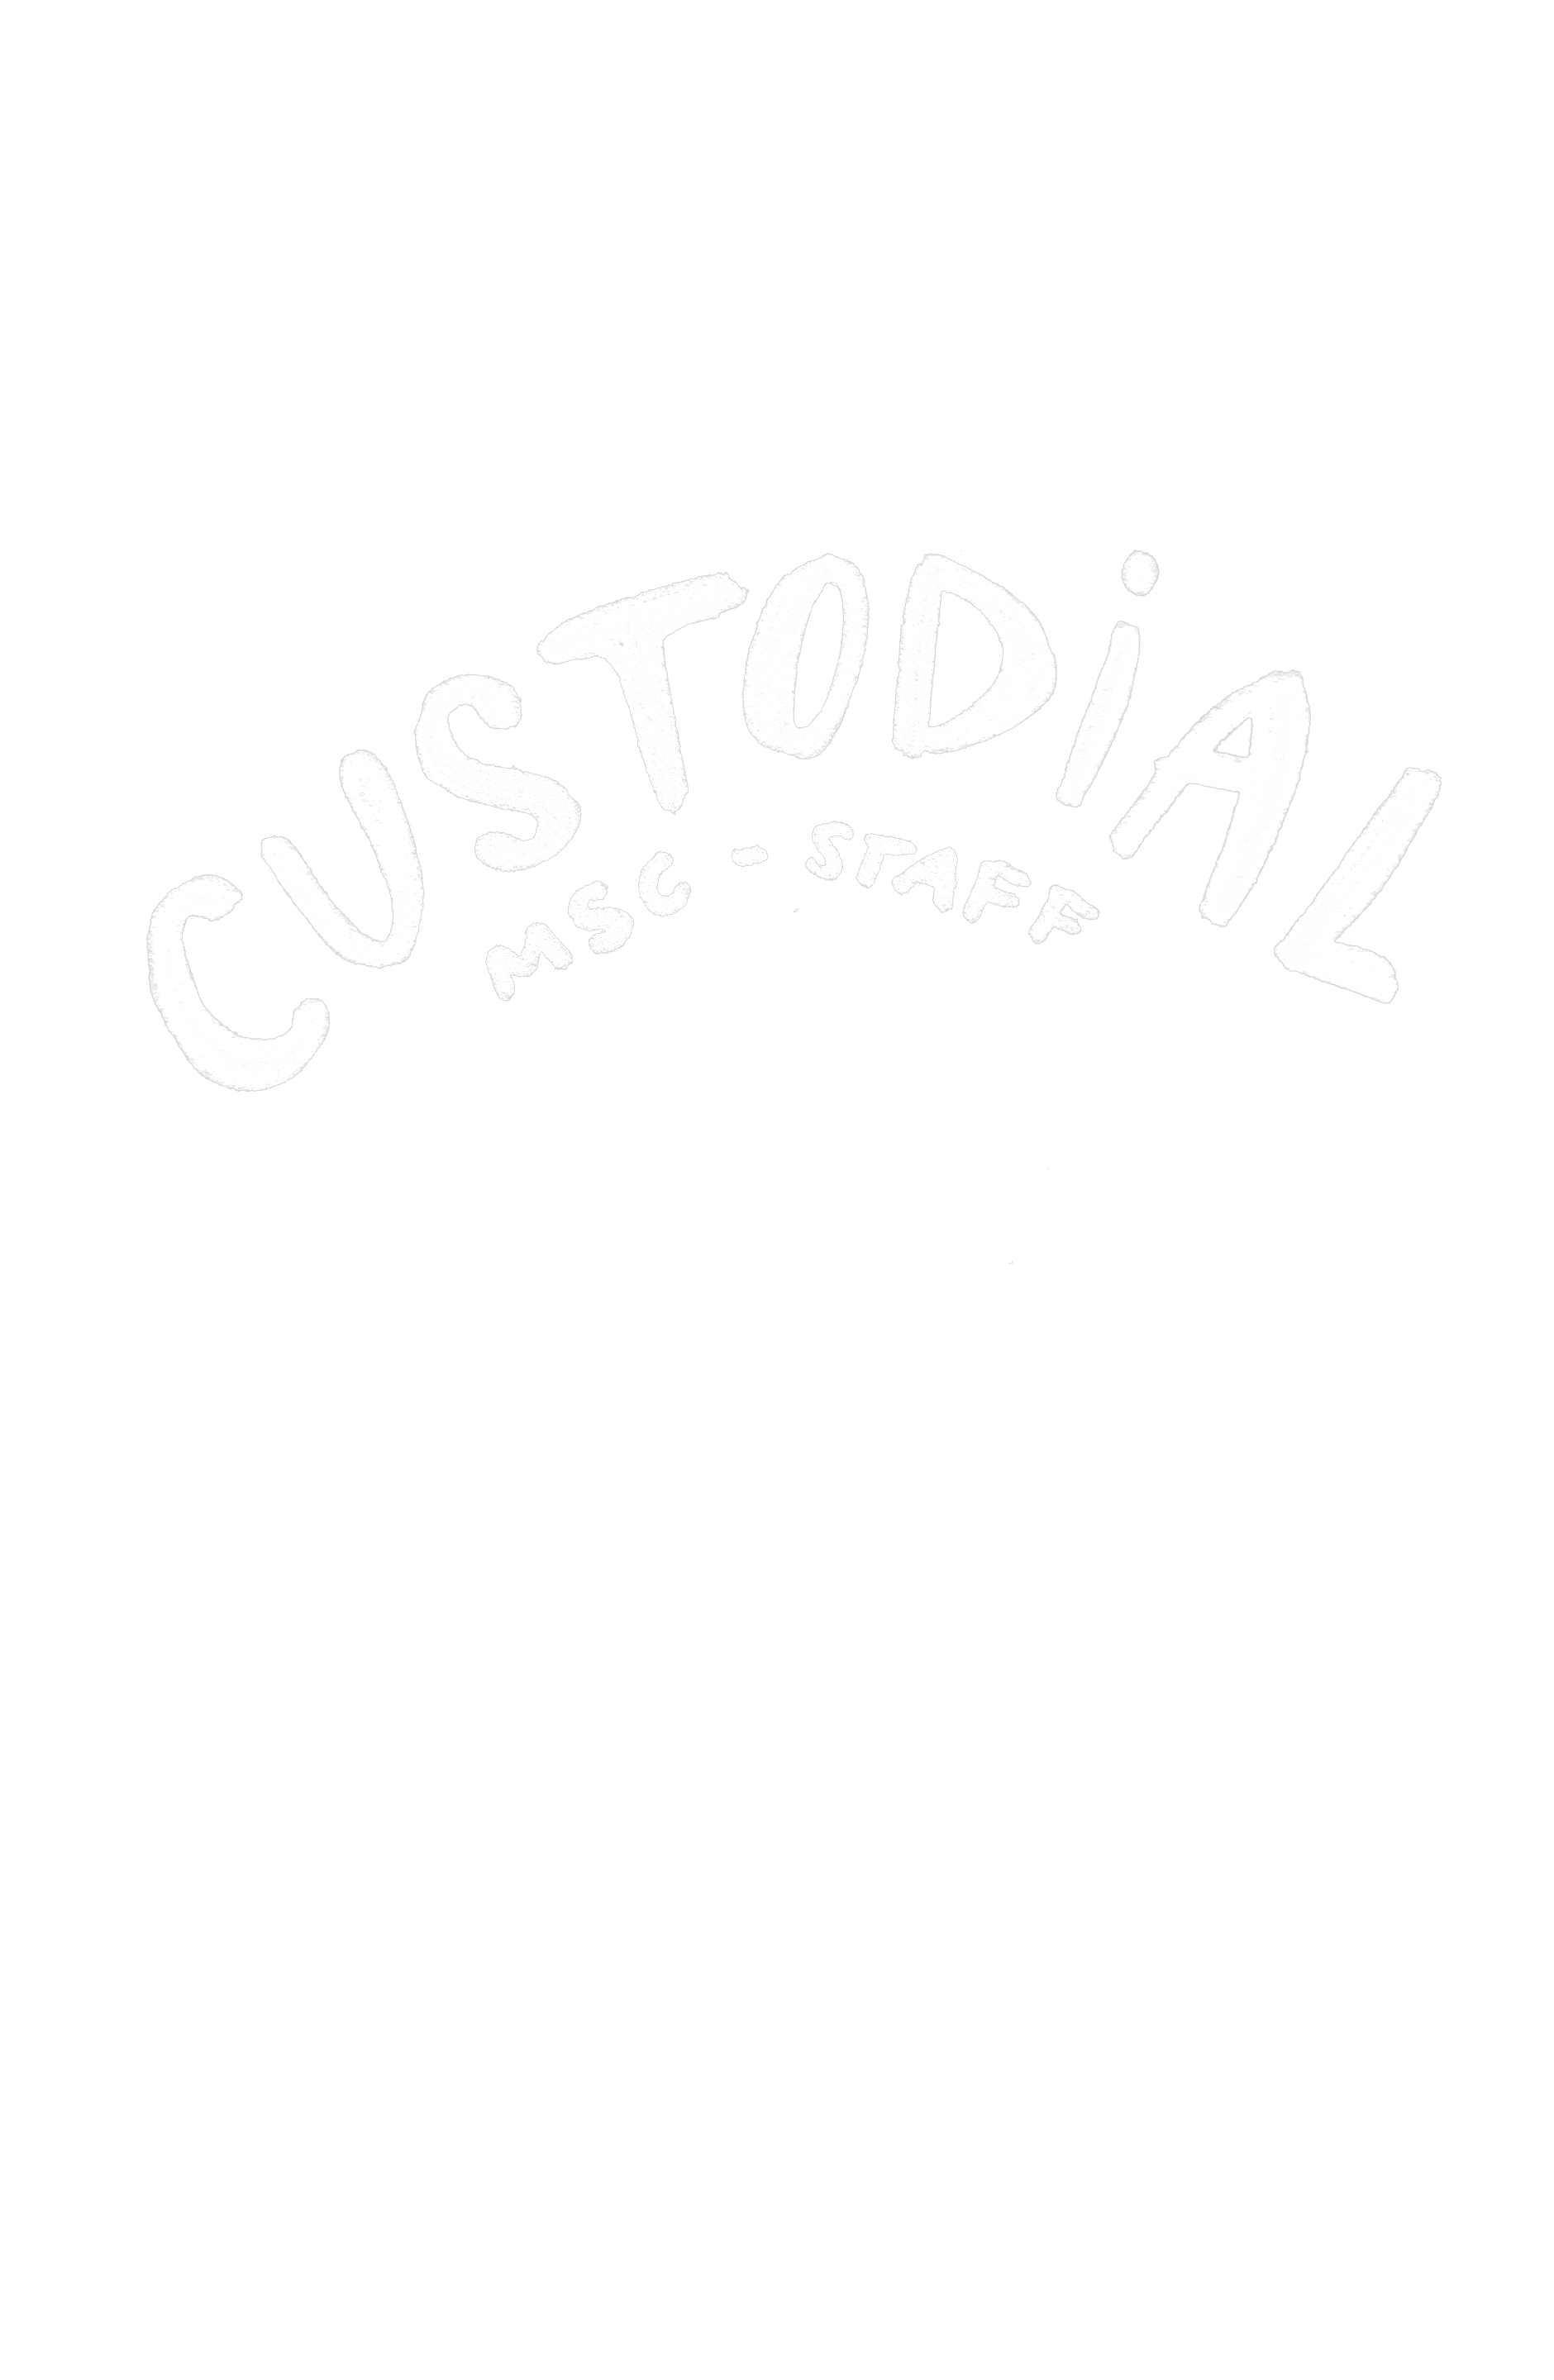 Custodial MSC-Staff